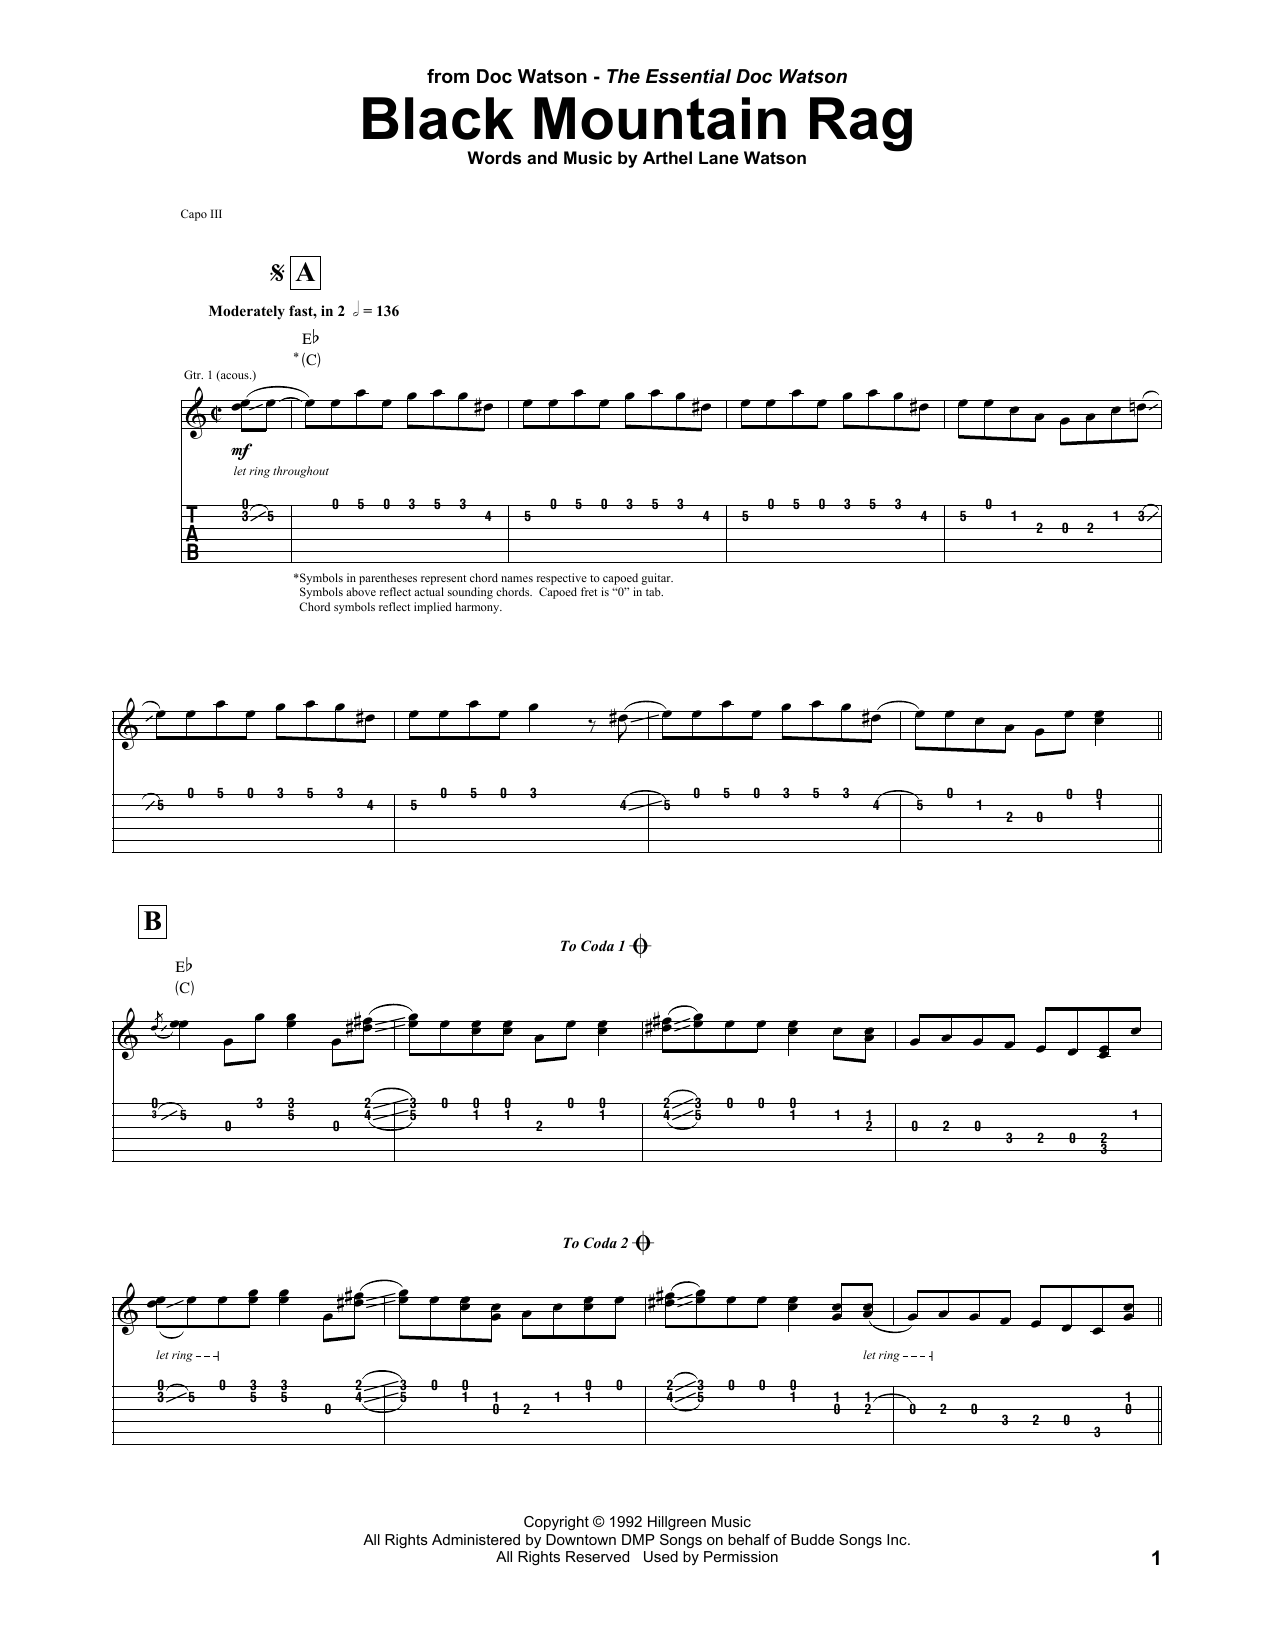 Doc Watson Black Mountain Rag Sheet Music Notes & Chords for Guitar Tab - Download or Print PDF